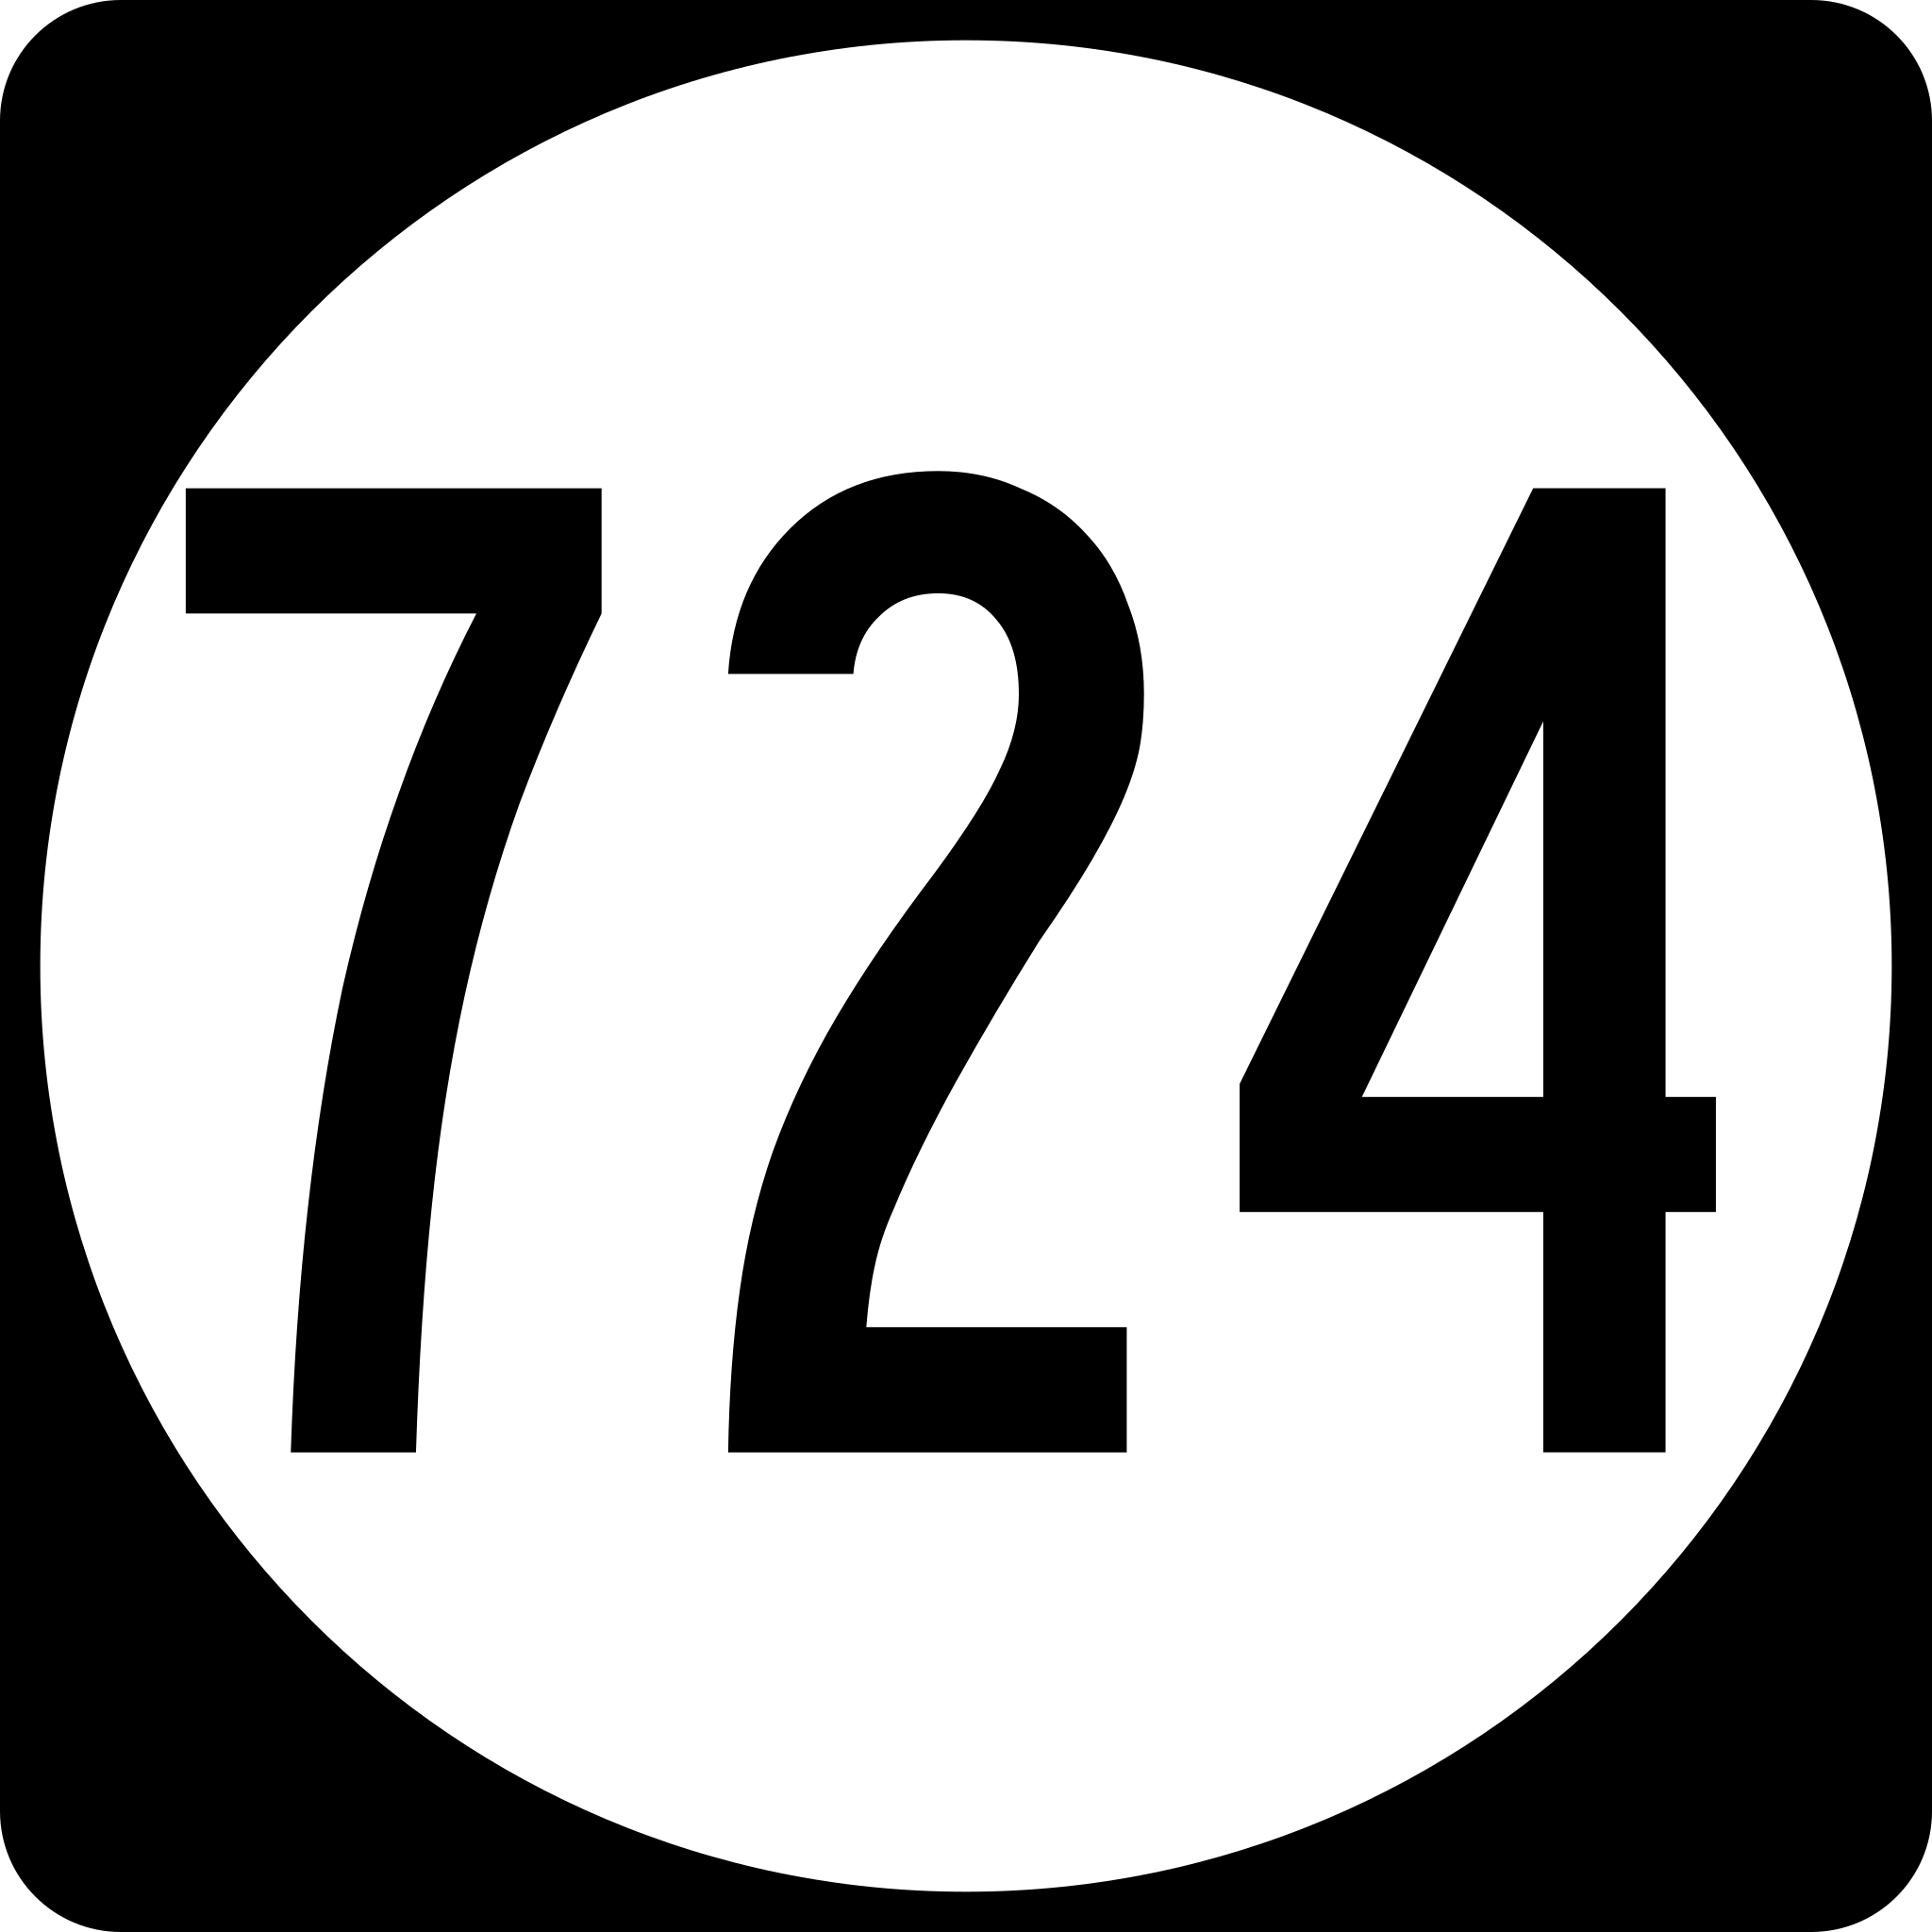 File:Circle sign 724.svg - Wikipedia